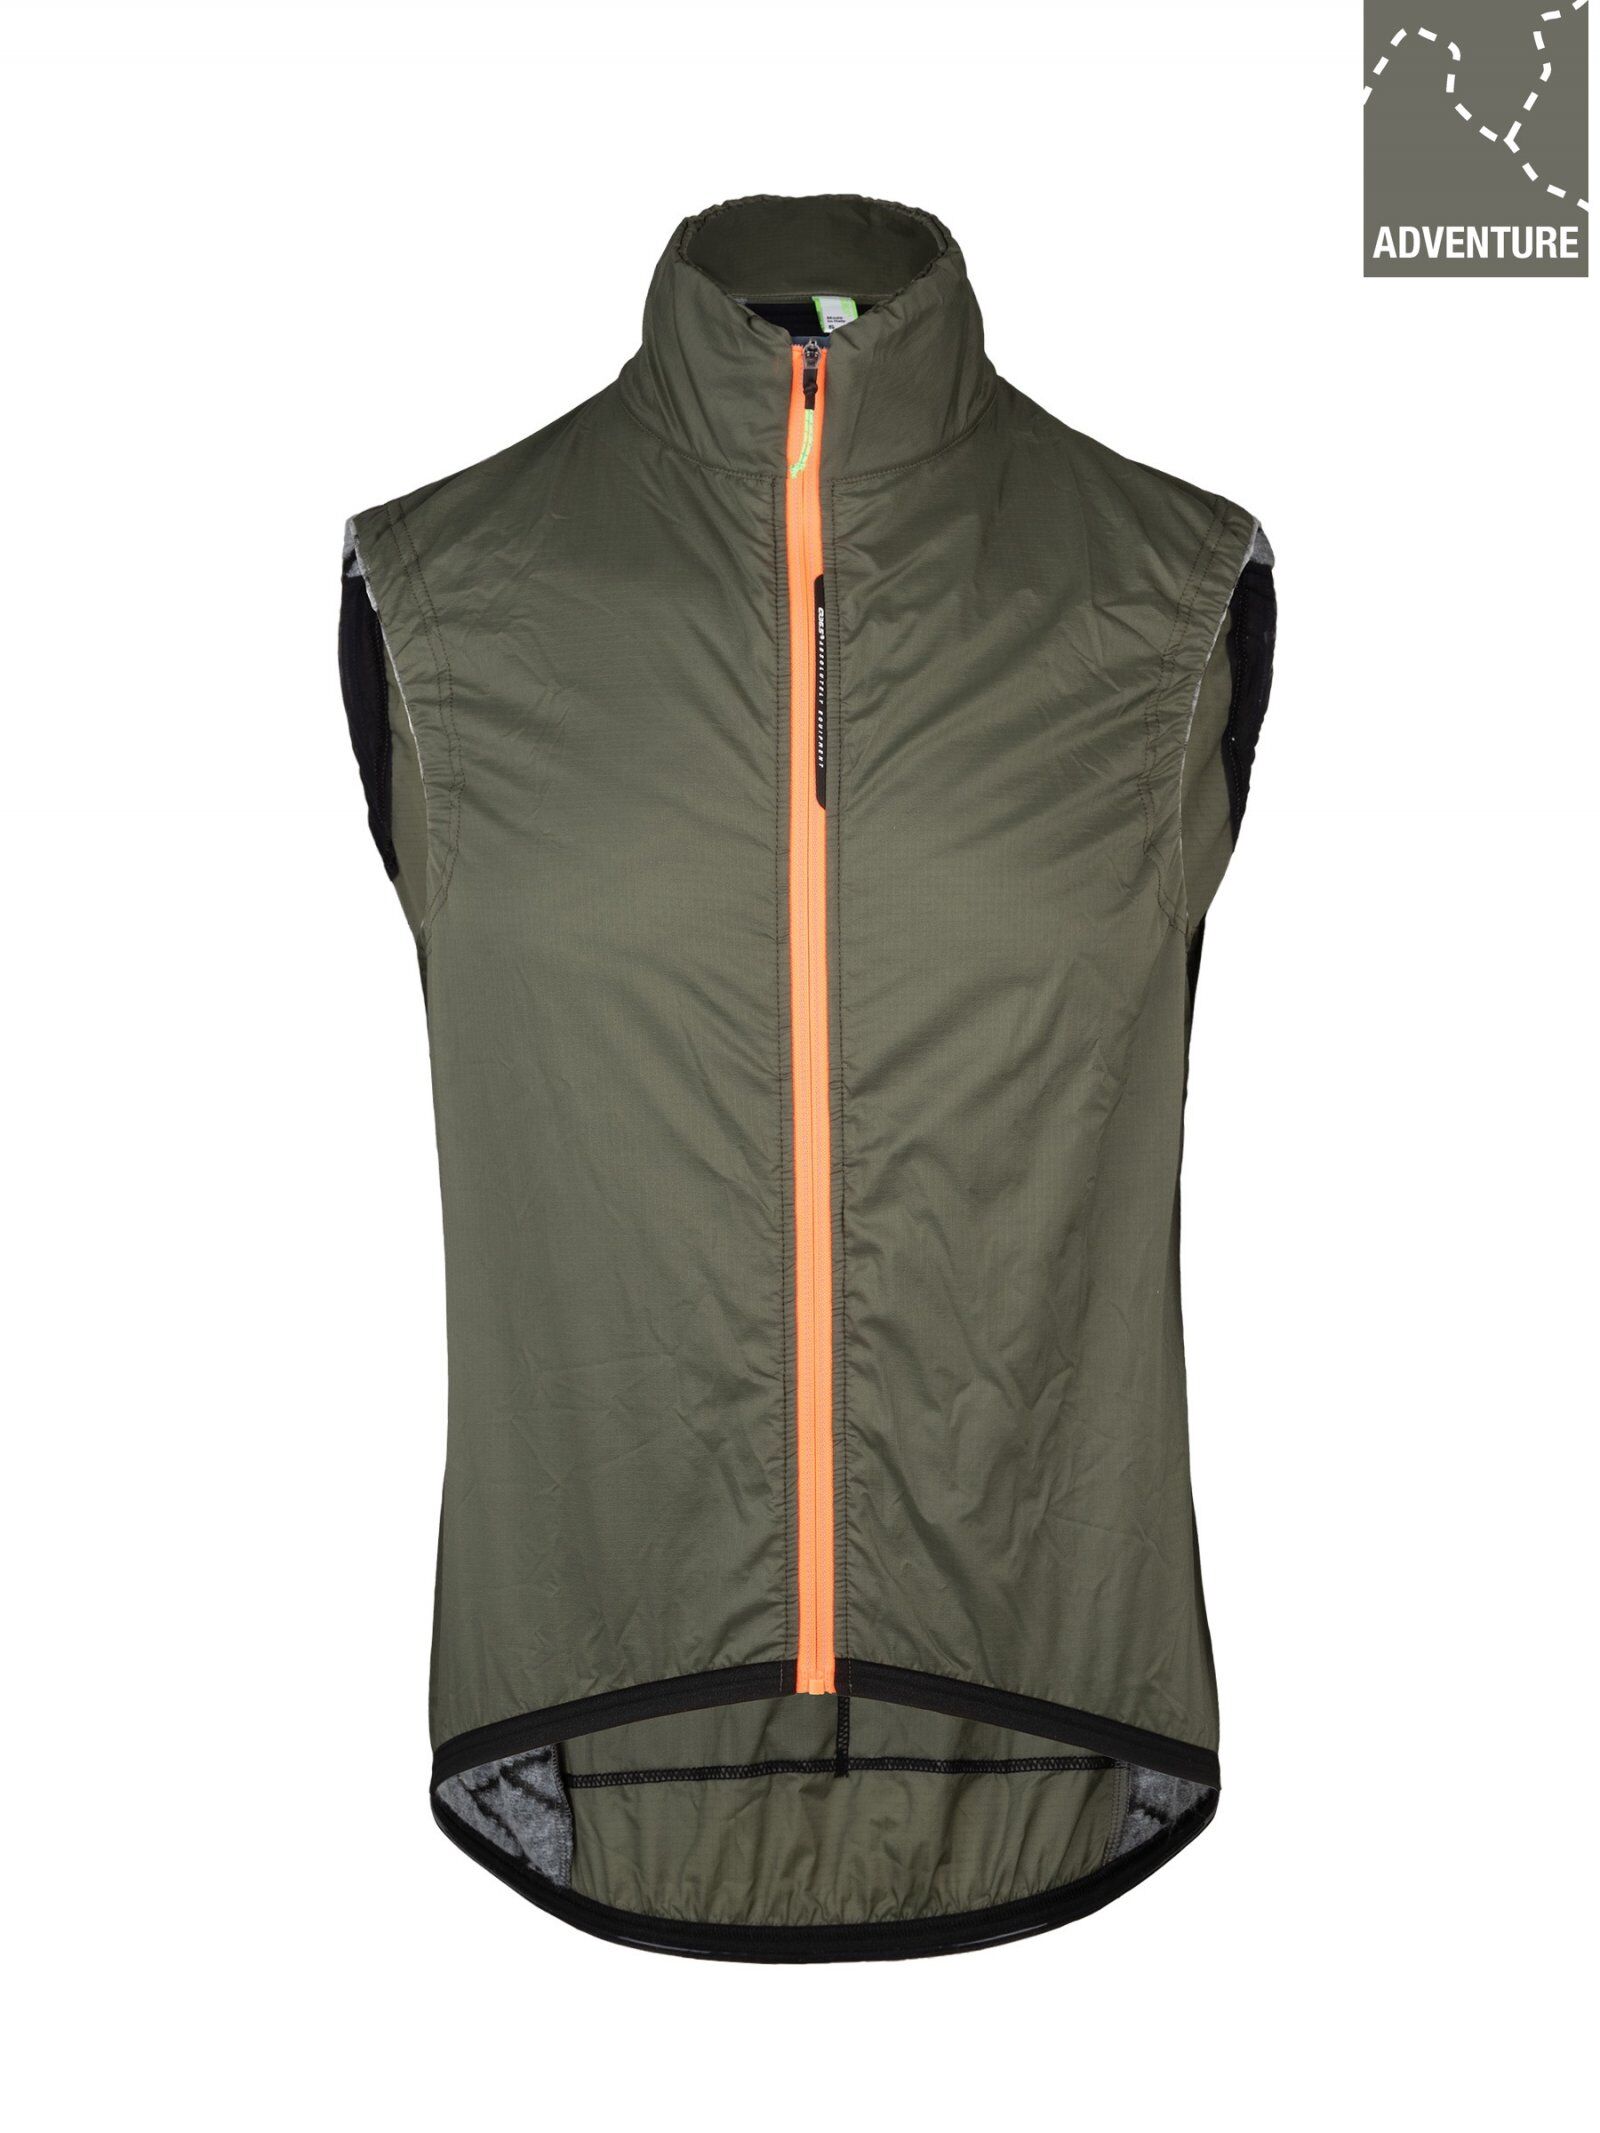 Q36.5 Adventure Insulation Vest - Cycling jacket - Men's